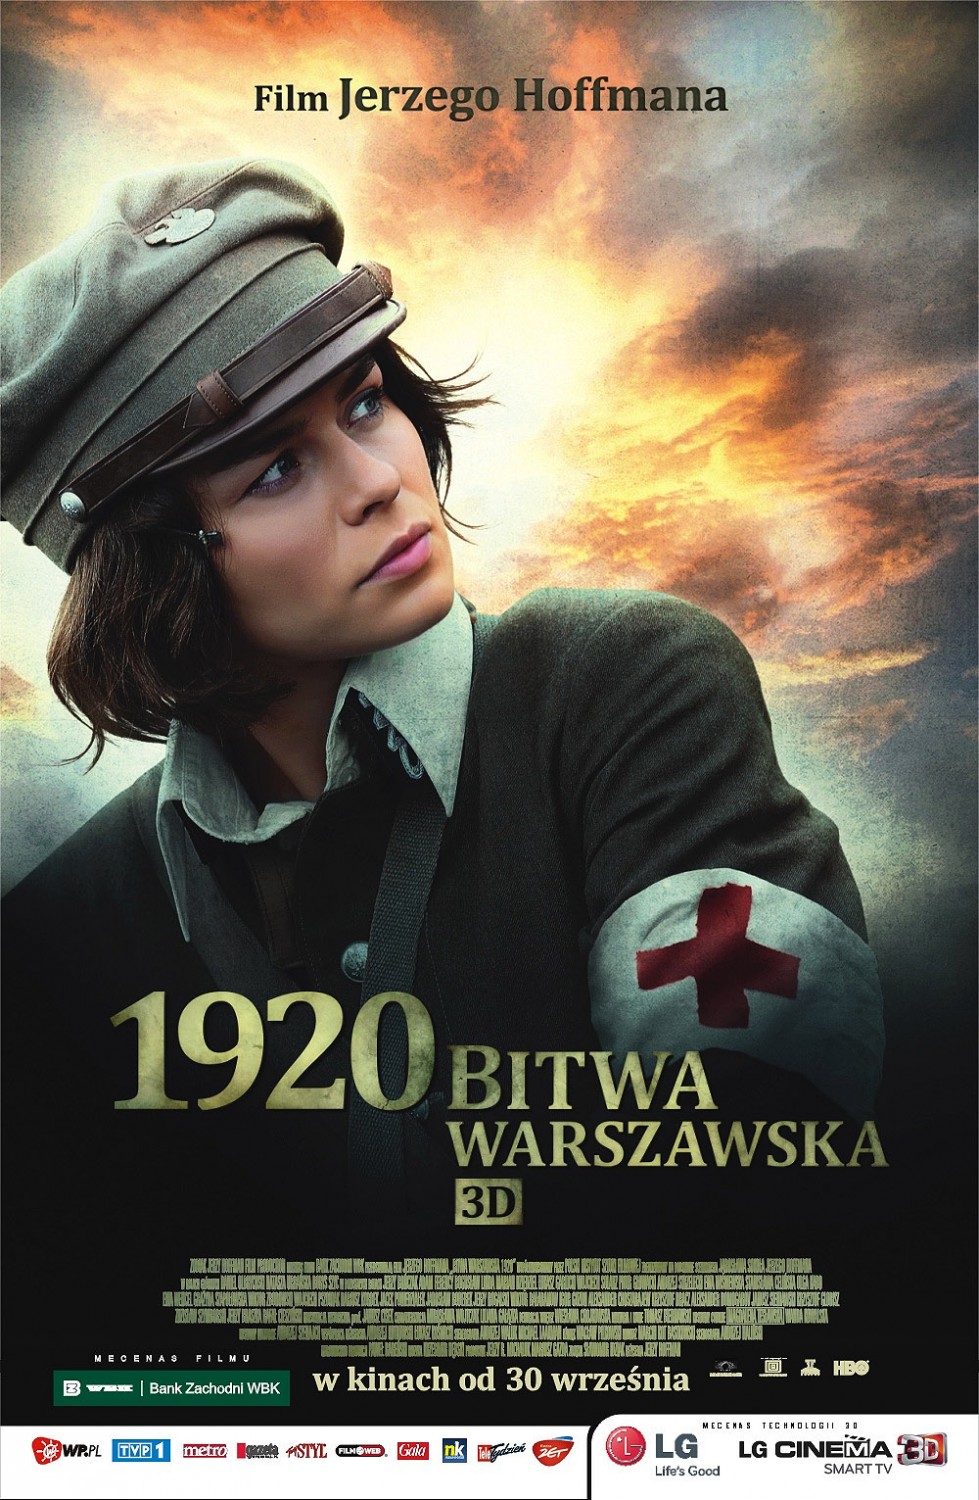 Extra Large Movie Poster Image for Bitwa warszawska 1920 (#3 of 7)